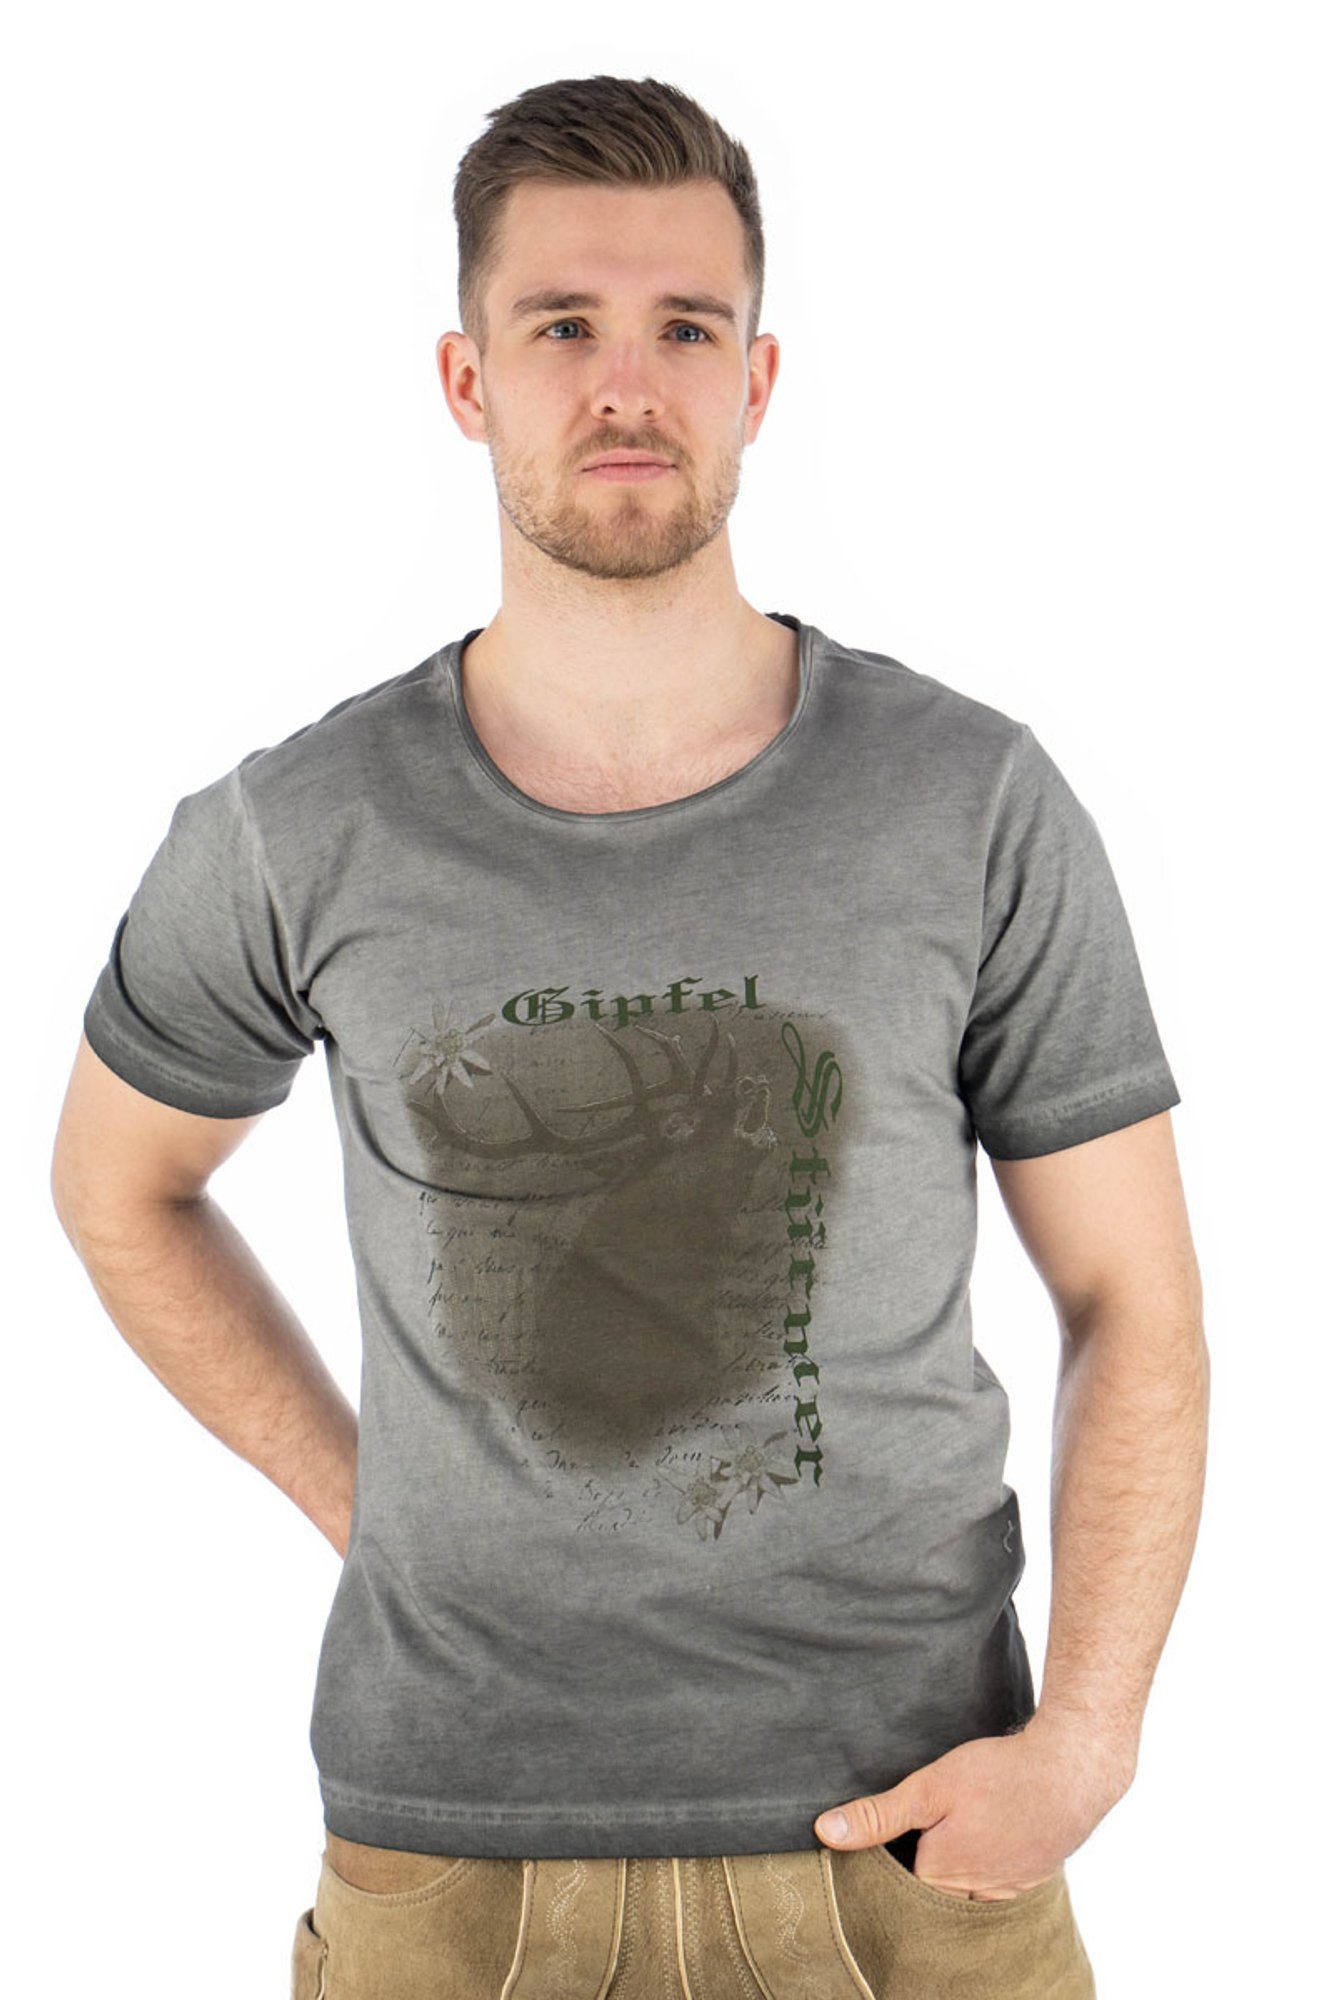 OS-Trachten Trachtenshirt Lyusop Kurzarm T-Shirt mit Motivdruck anthrazit